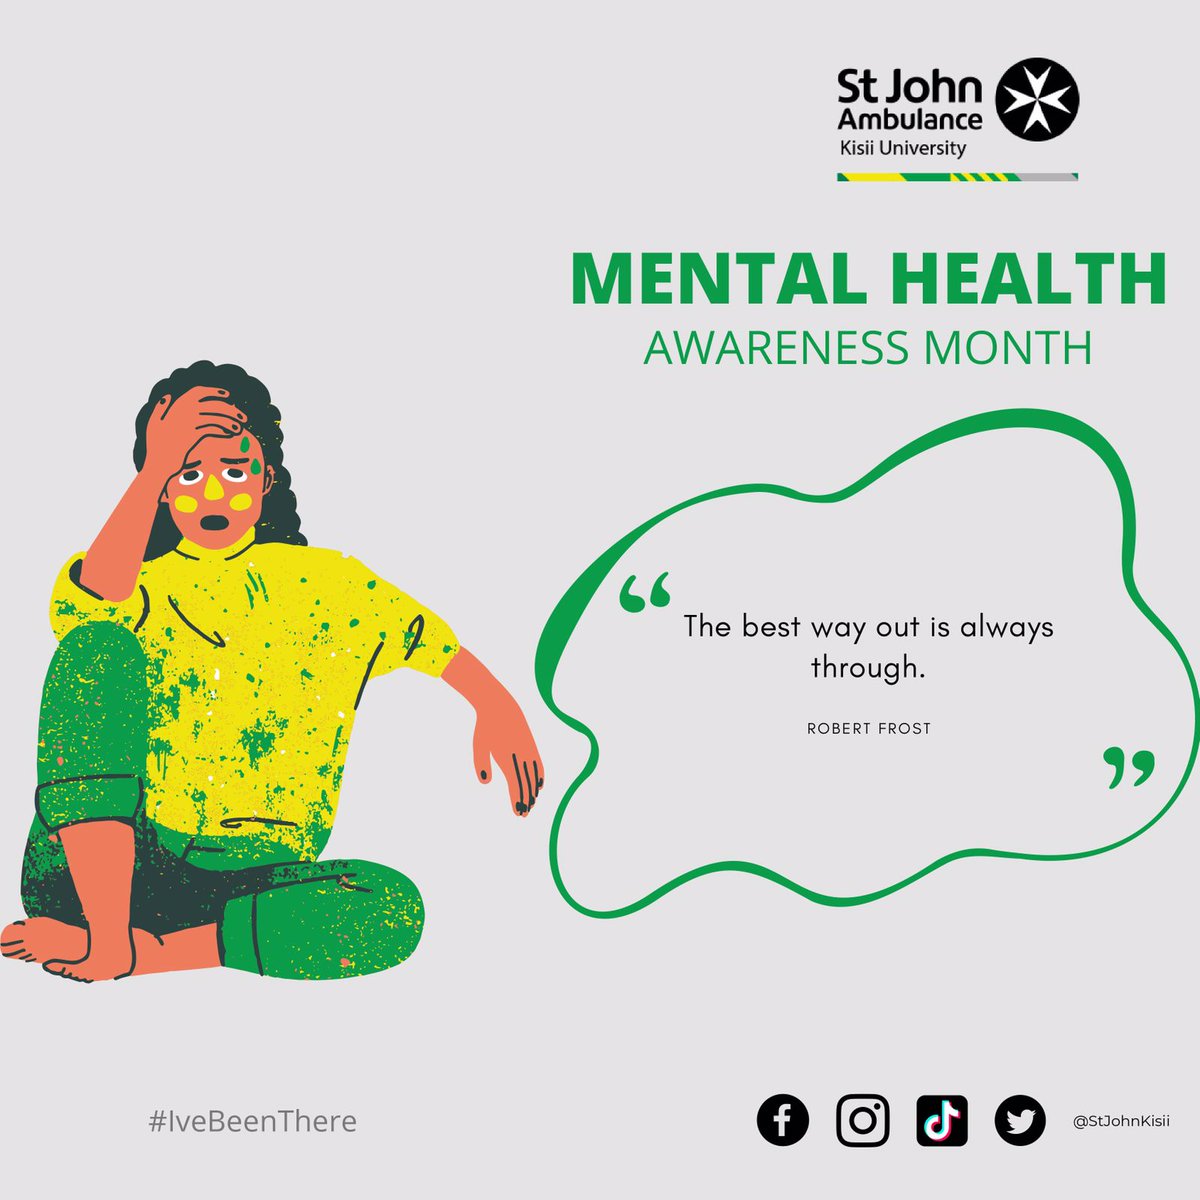 “The best way out is always through.” ~ Robert Frost

@StJohnKisii 

#StJohnKisii #StJohnPeople #StJohnCares #KisiiUniversity #IveBeenThere #MentalHealth #MentalHealthAwareness